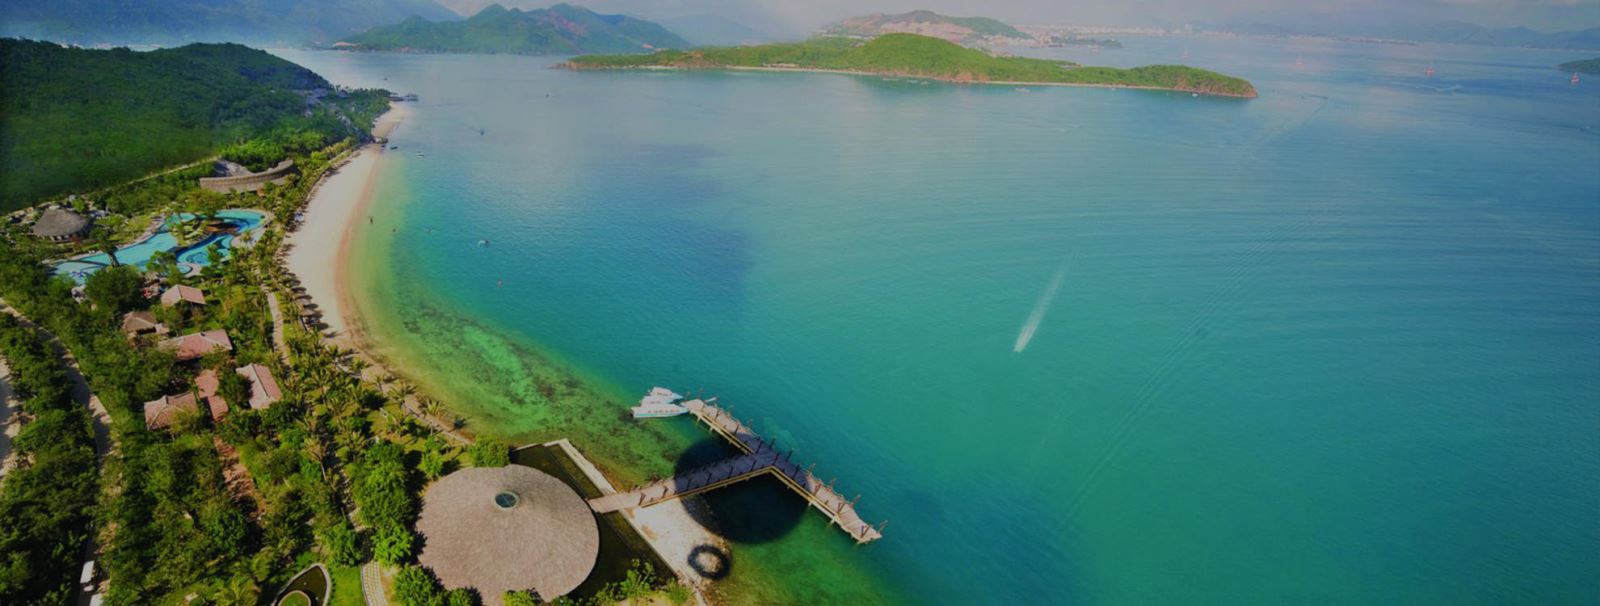 Hon Dau - Attractive island